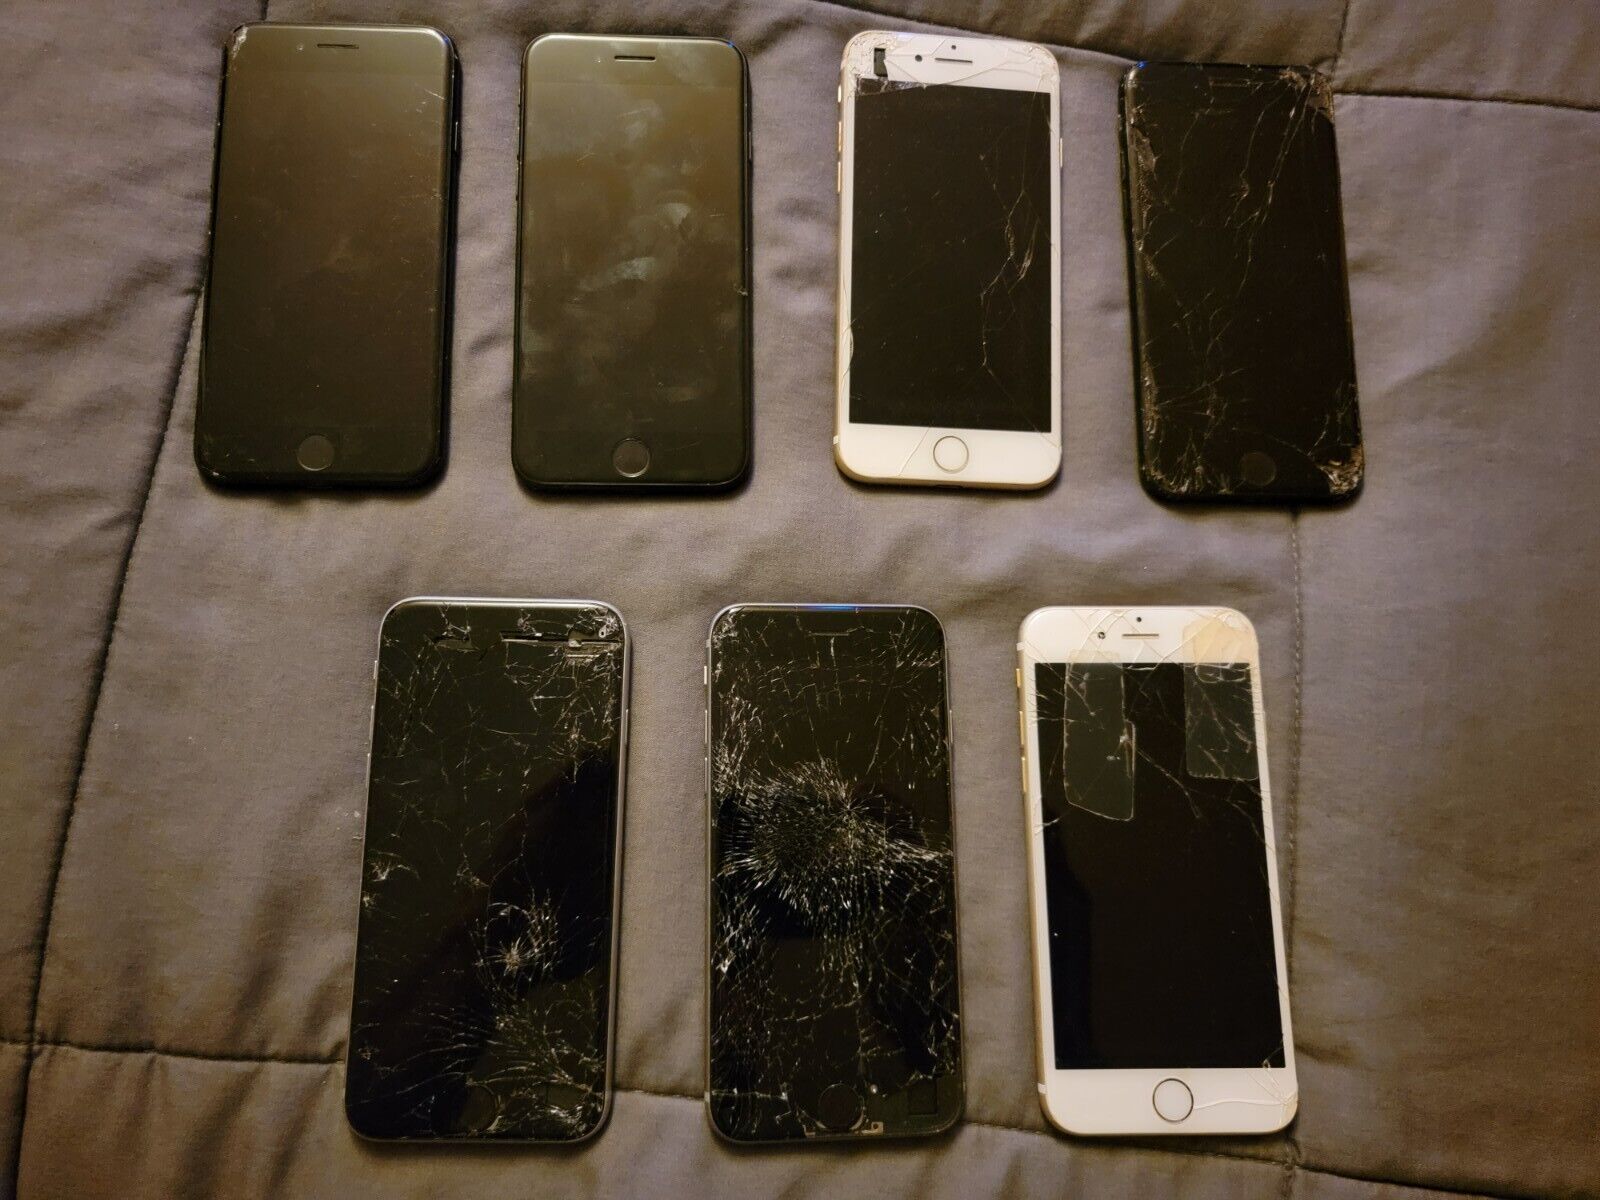 Lot of 7 iPhones "For Parts" or Repair